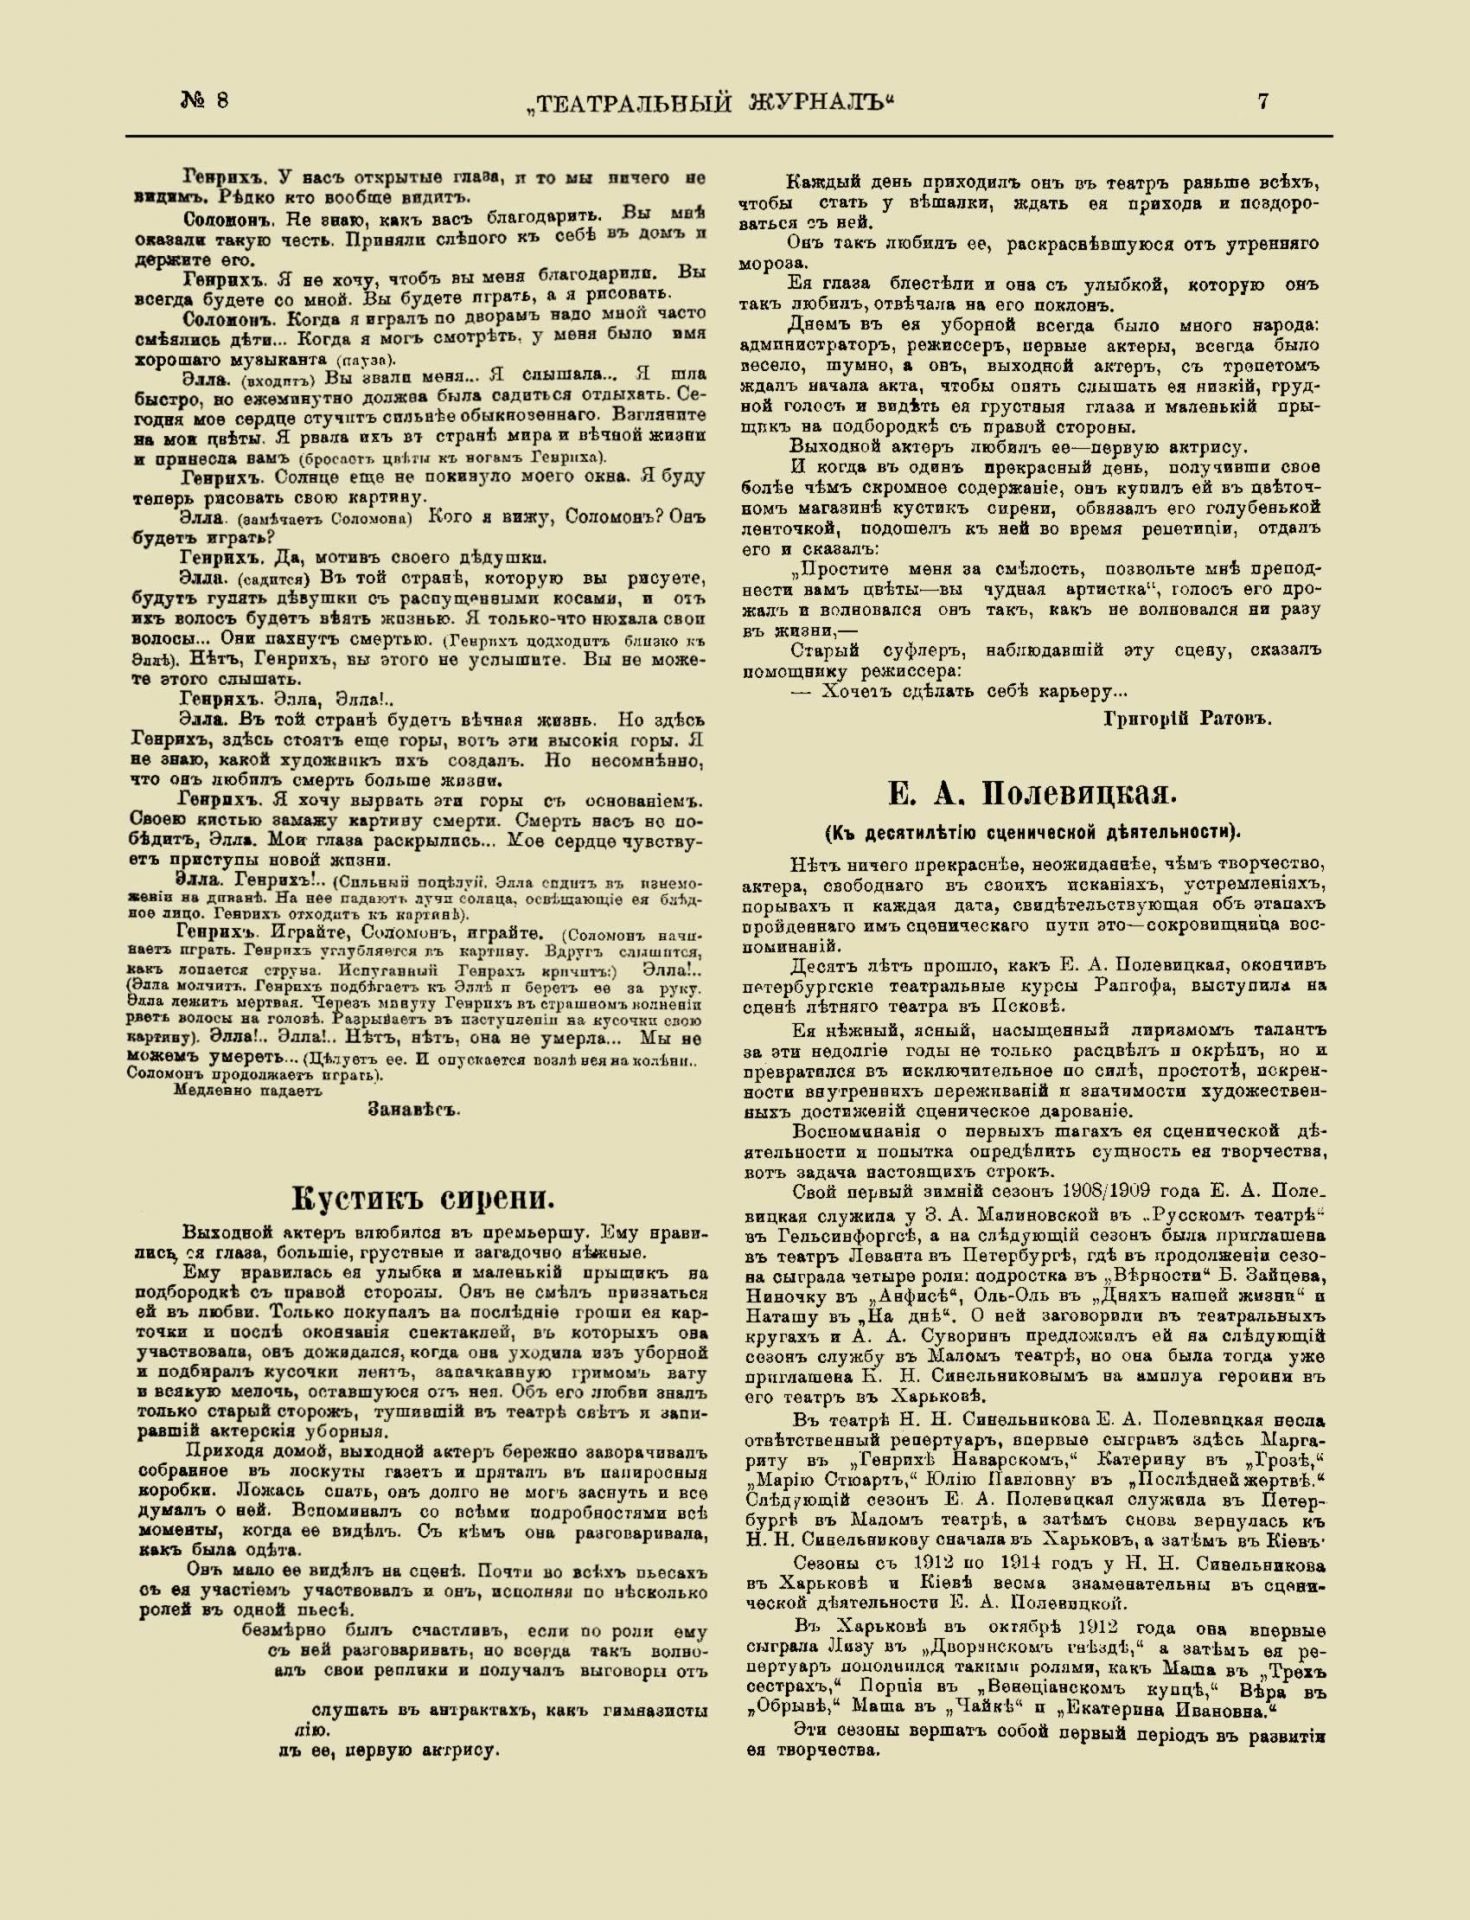 Театральный журнал_1918_№8